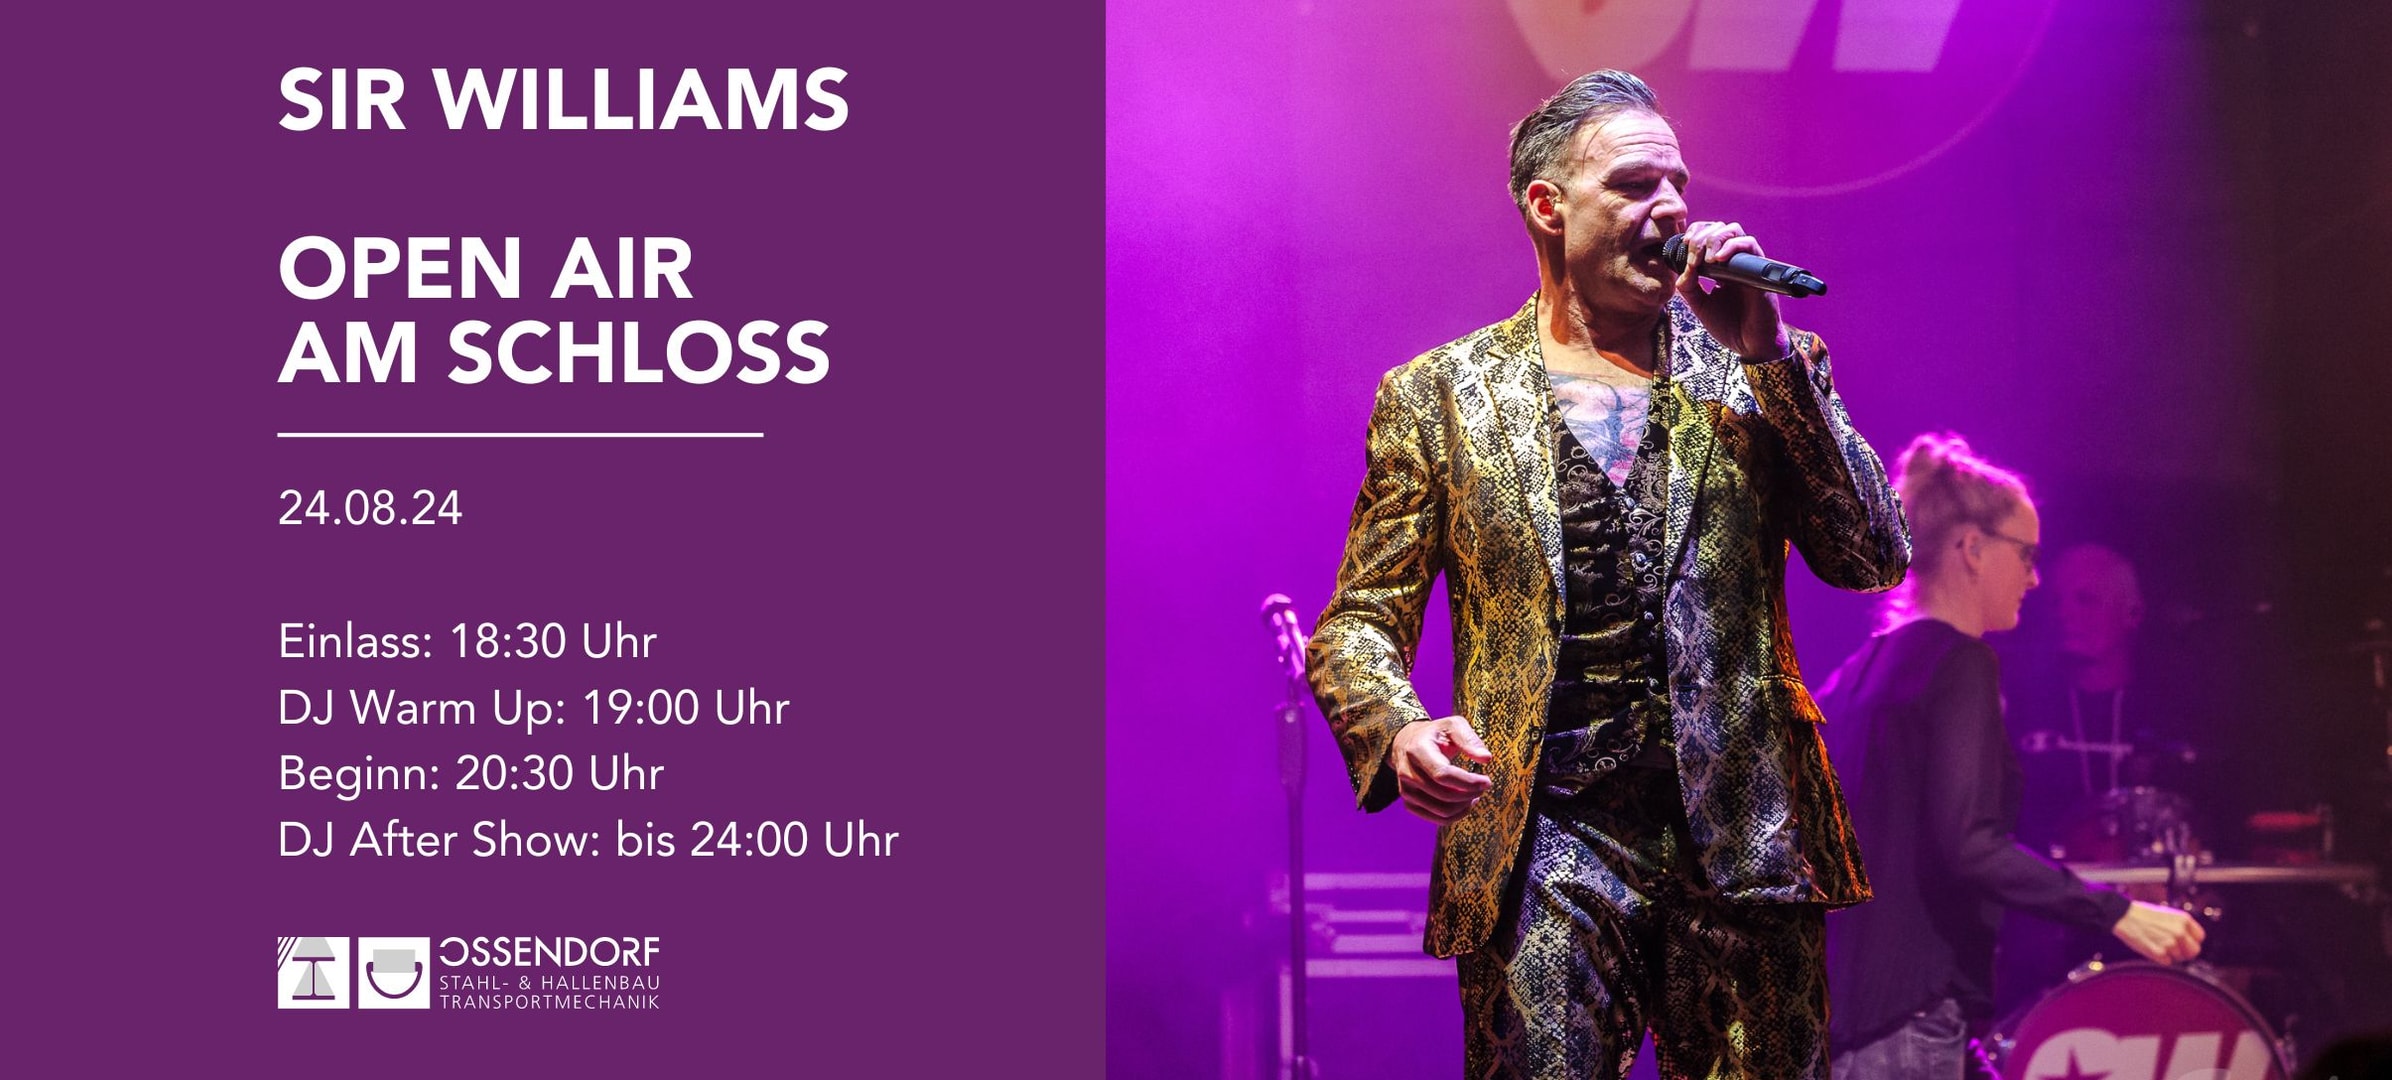 Live am Schloss: Robbie Williams Tribute Show